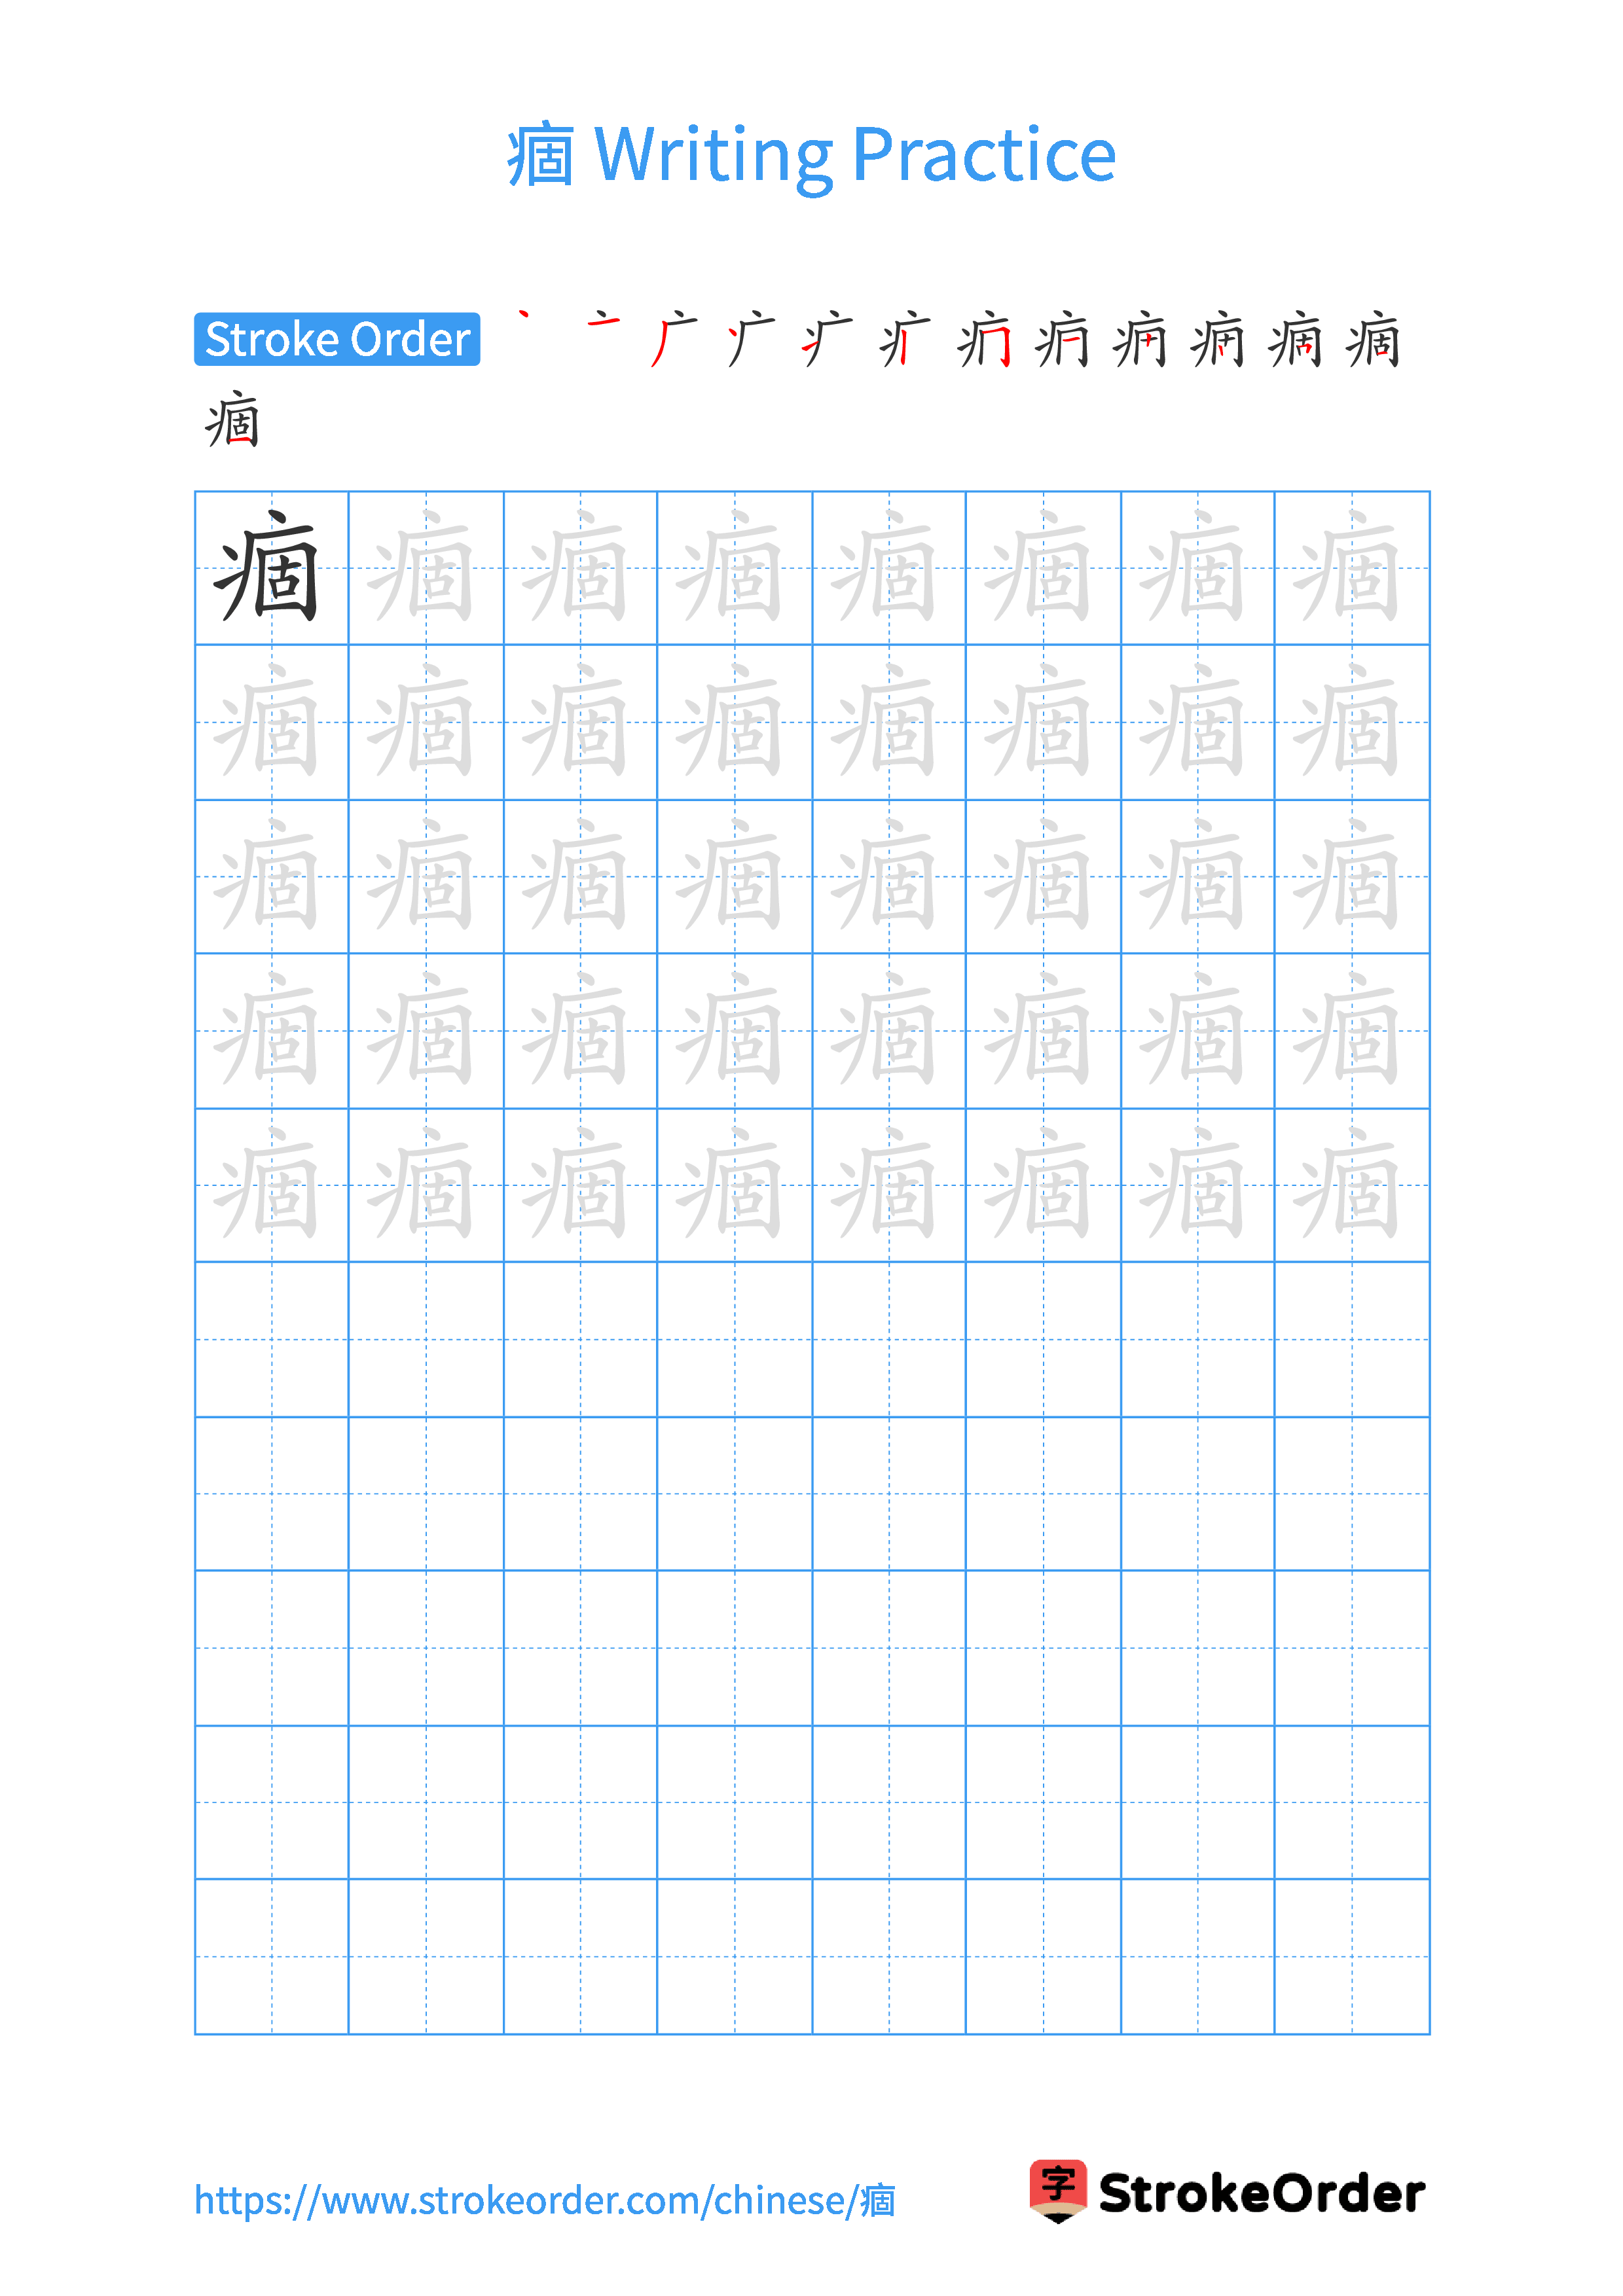 Printable Handwriting Practice Worksheet of the Chinese character 痼 in Portrait Orientation (Tian Zi Ge)